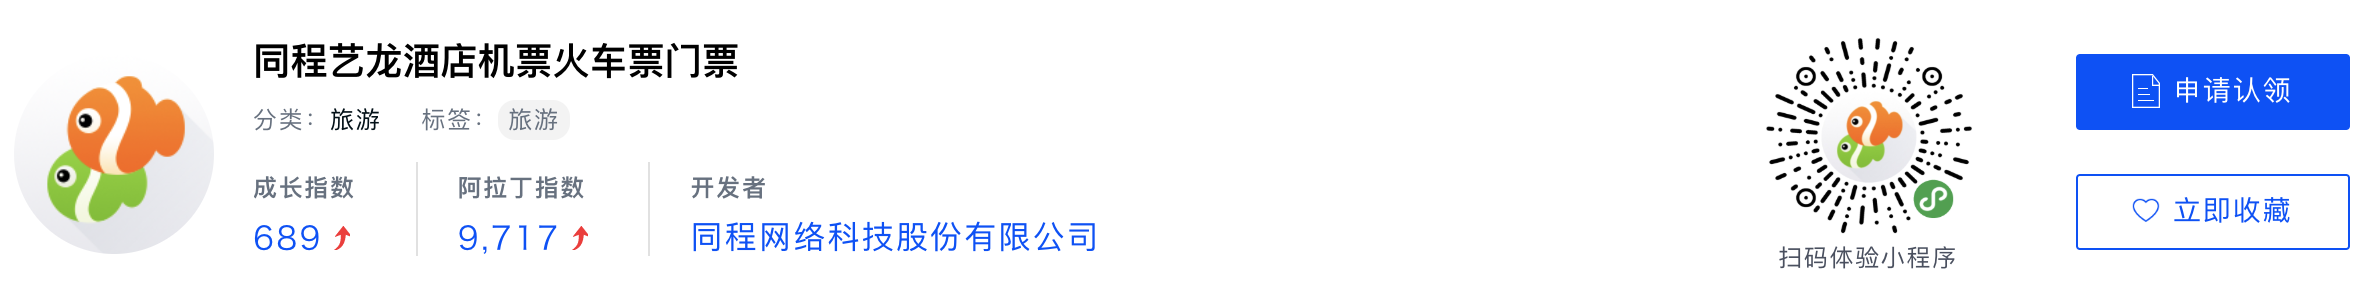 WeChatミニプログラム最新ランキングTOP20【2019年6月版】4位：同城艺龙酒店机票火车票门票